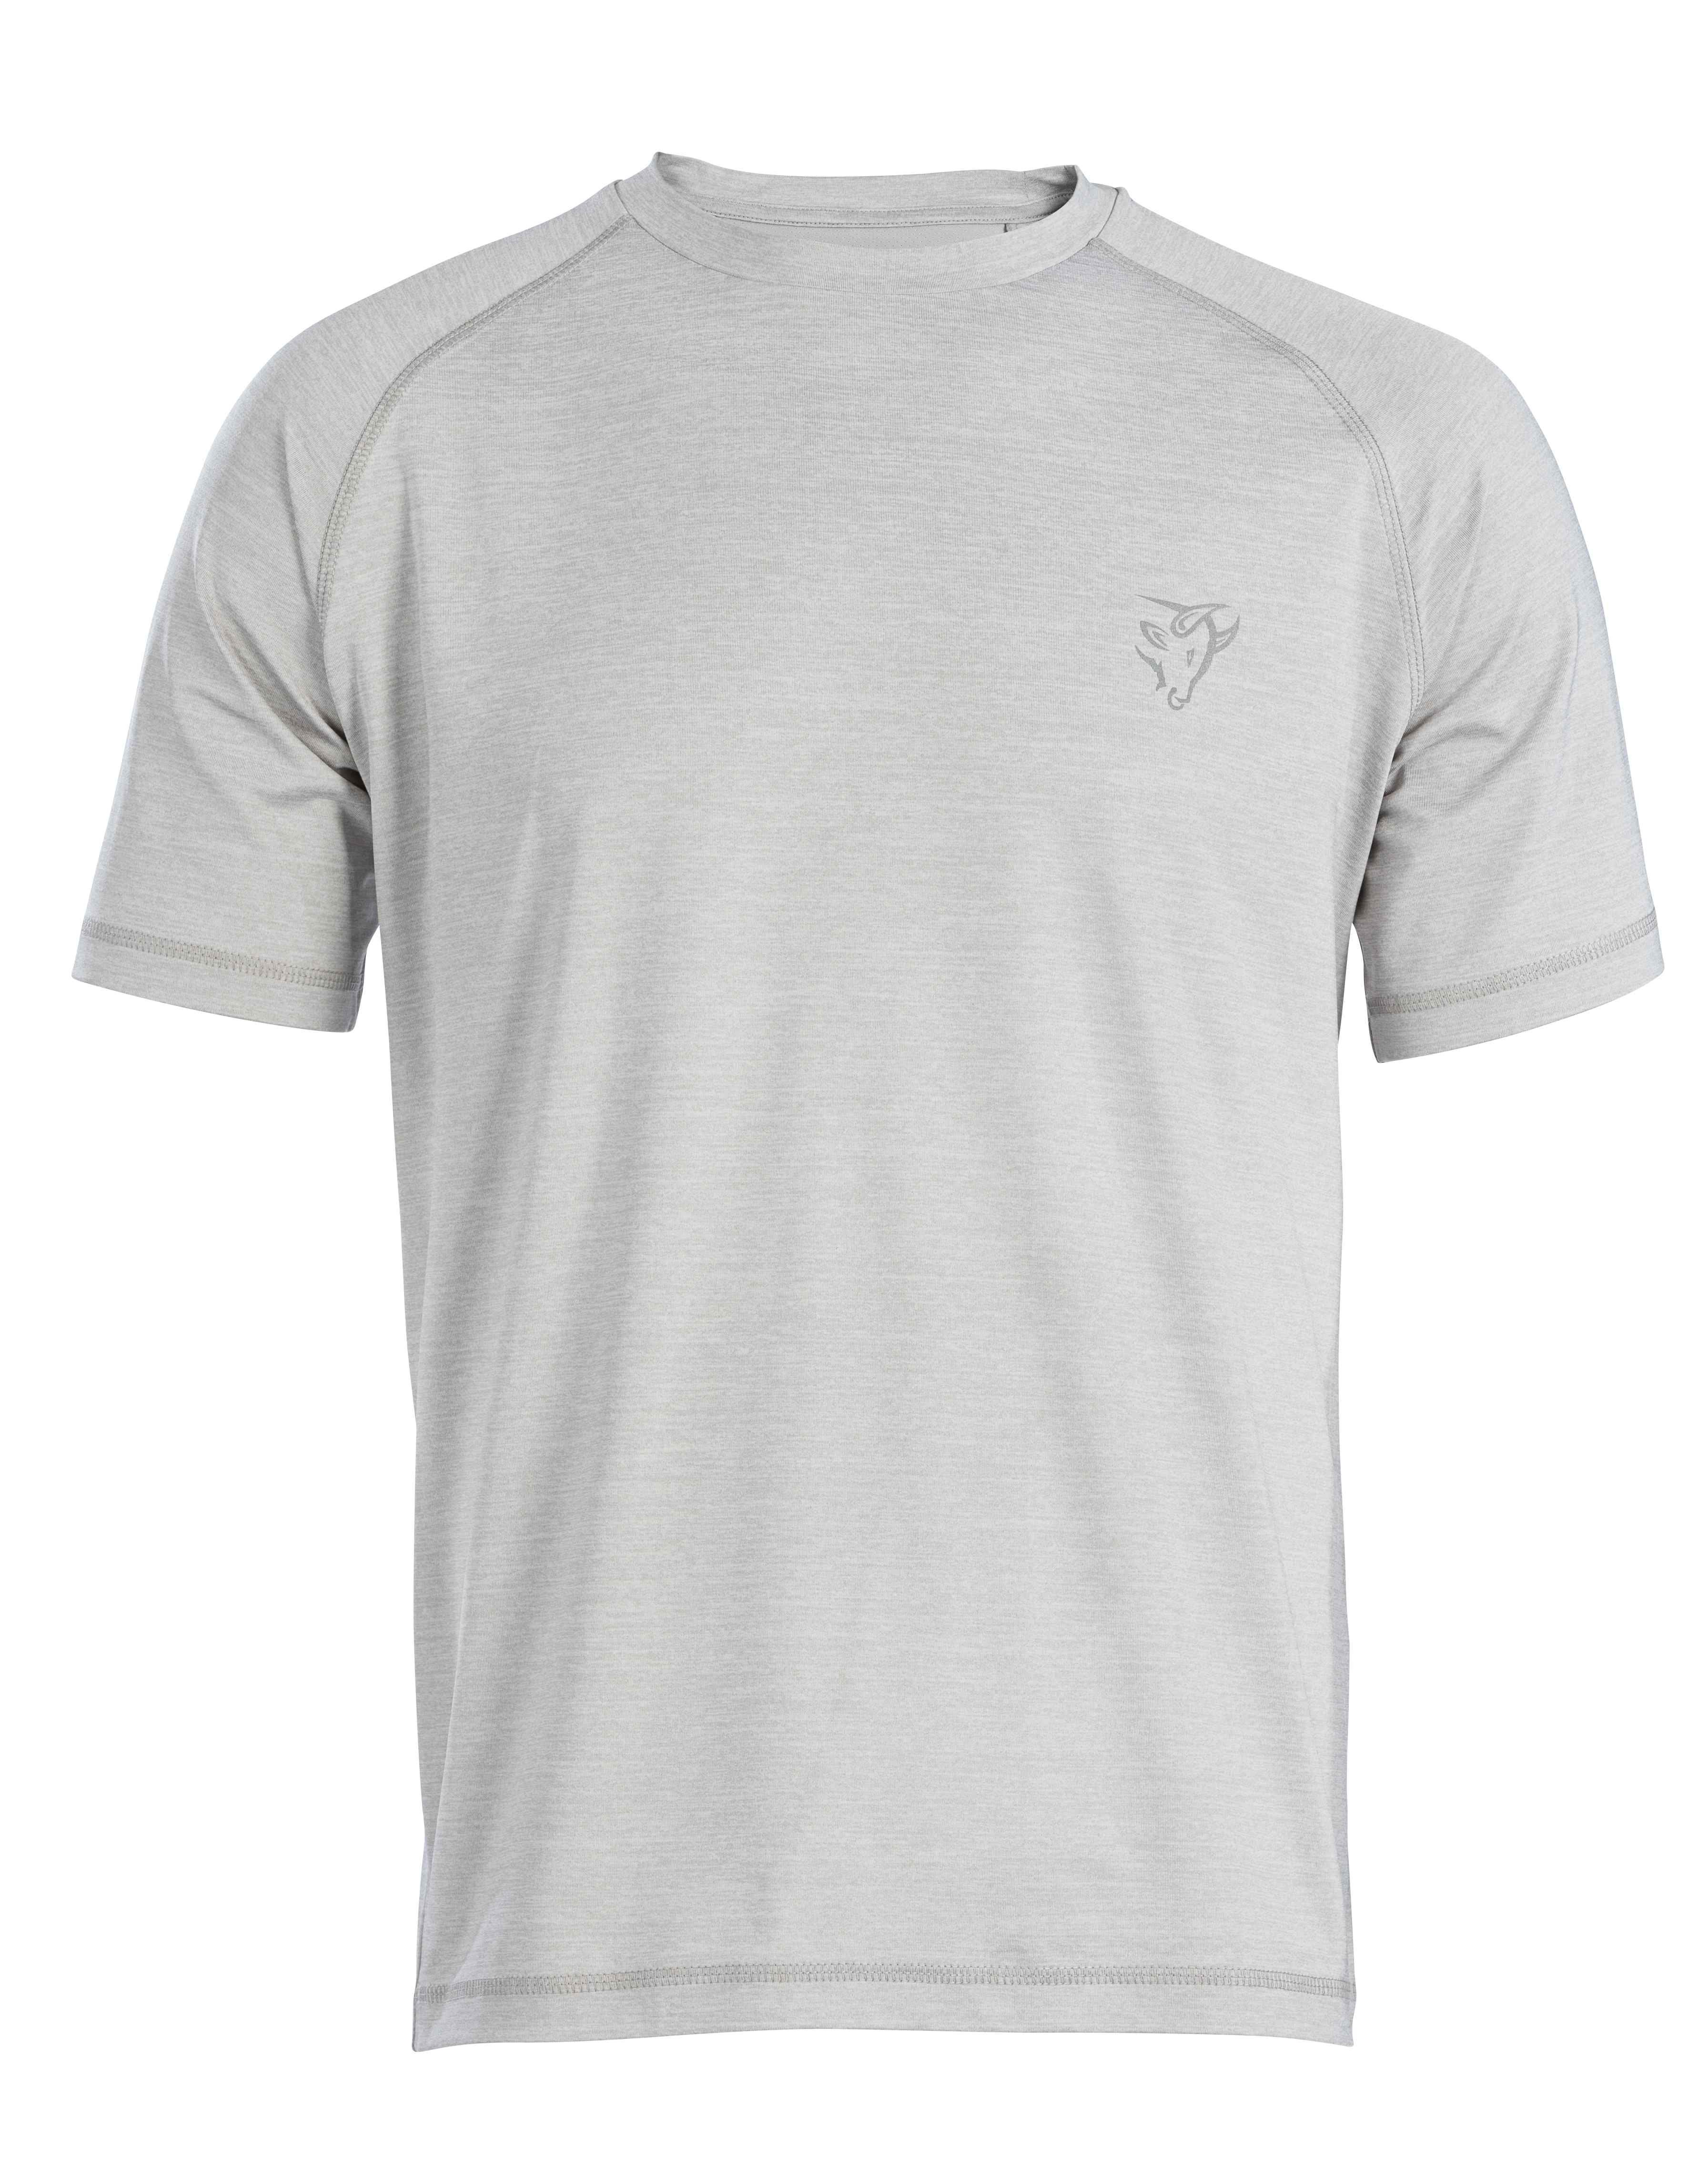 OX Tech Crew T-Shirt Grey - M